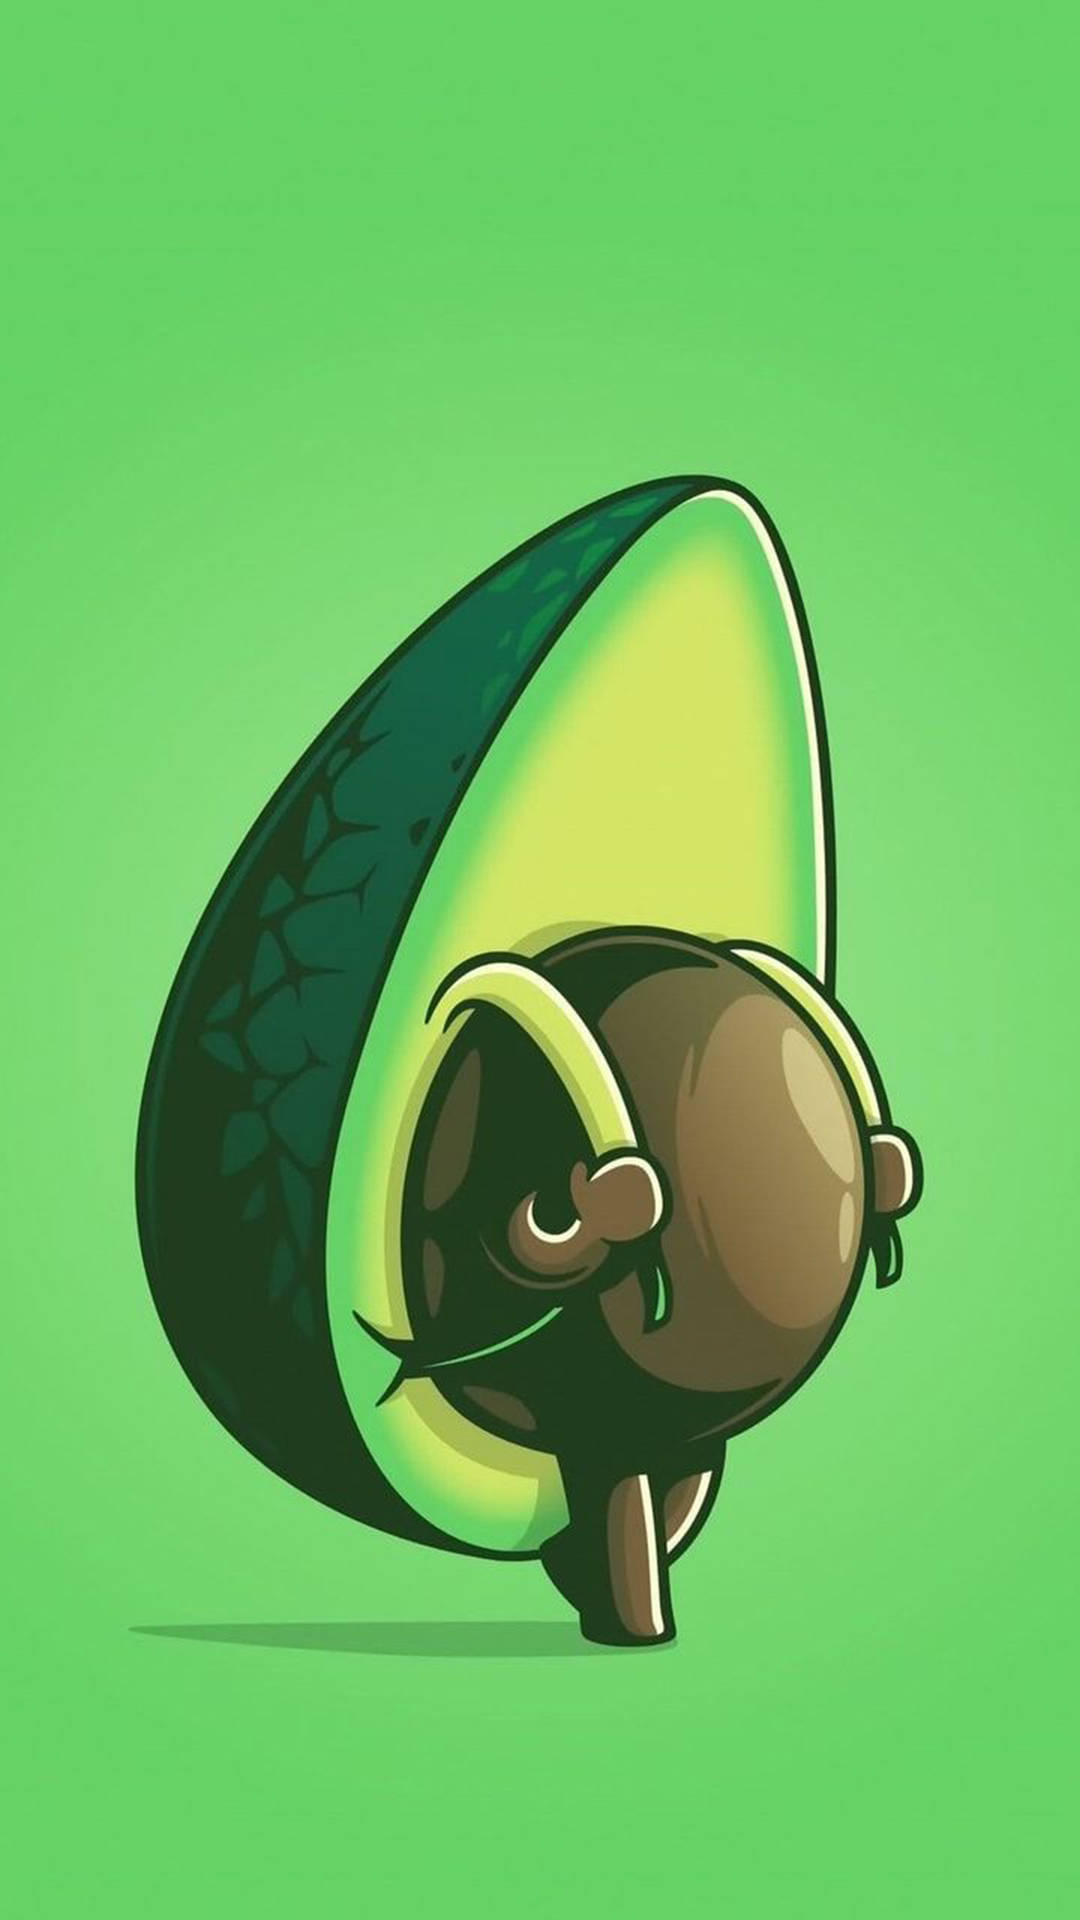 Get Green, Get Cute - Avocado Backpack! Background